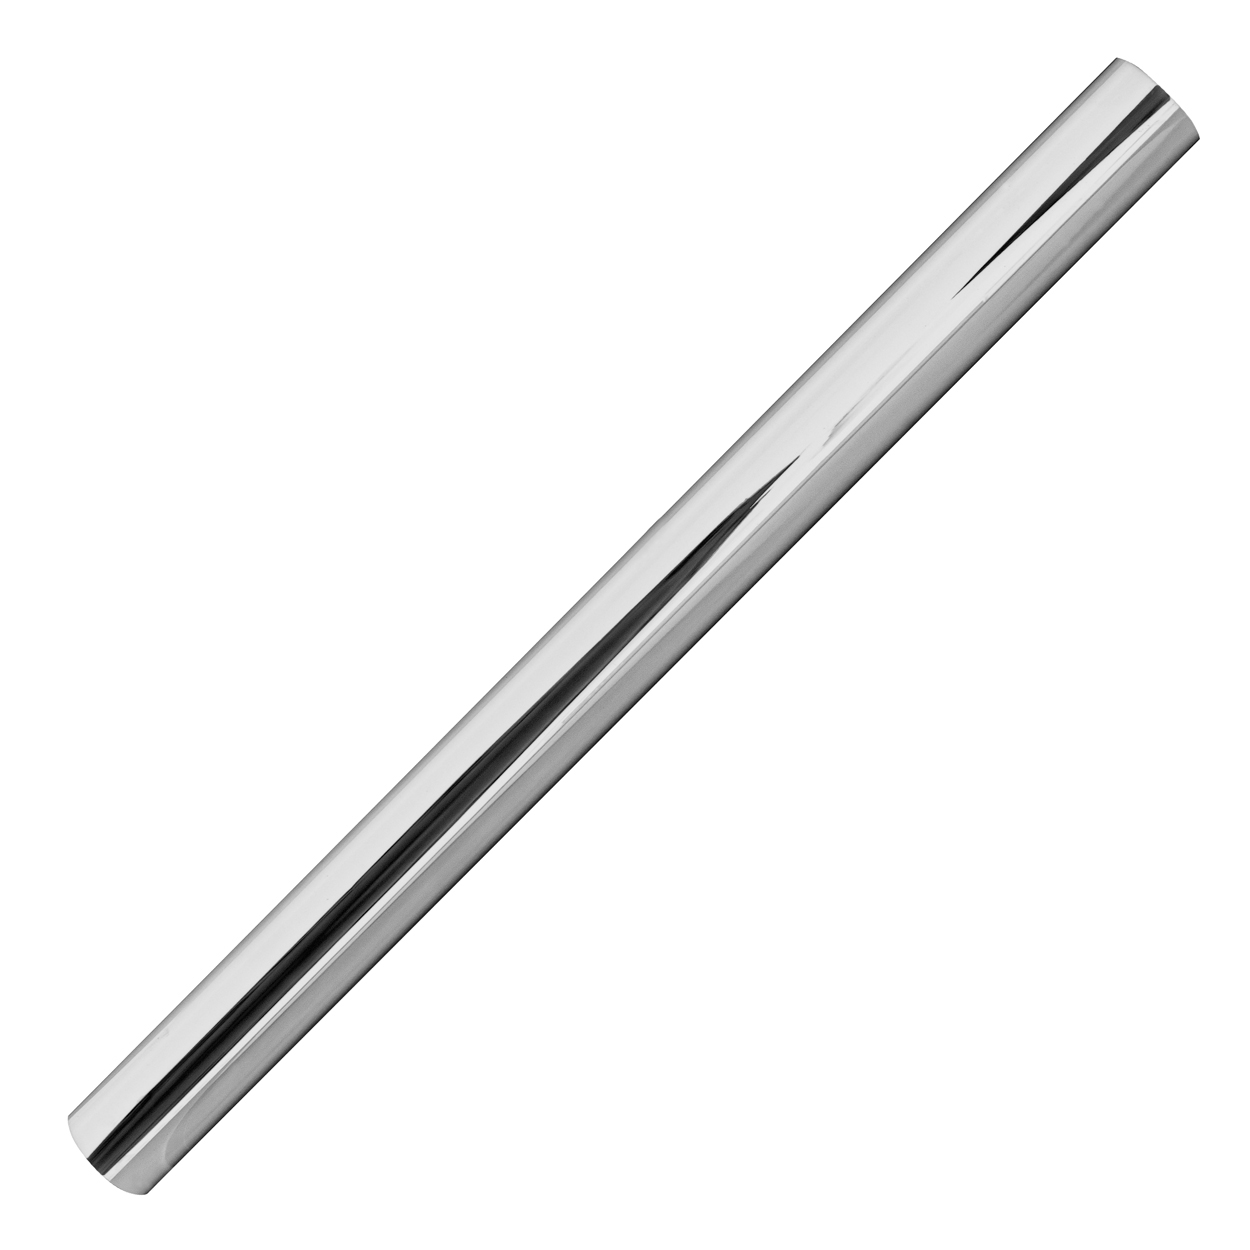 Folie solara pentru geam Amio, 75x300cm, transparenta 15% Dark Silver - Argintiu inchis thumb